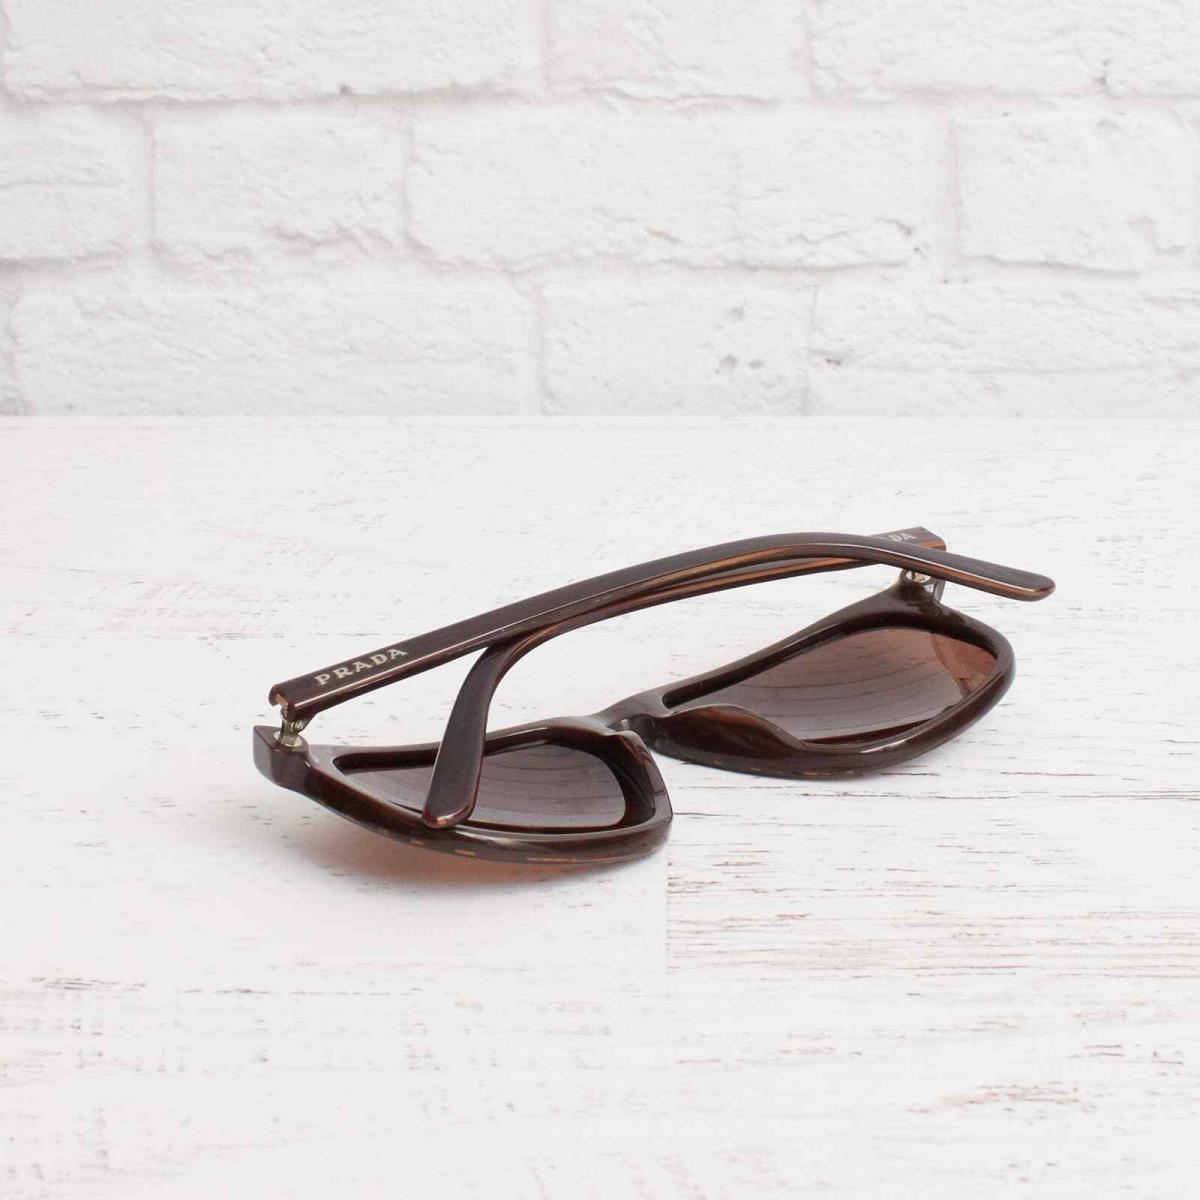 Prada sunglasses  - Brown Frame